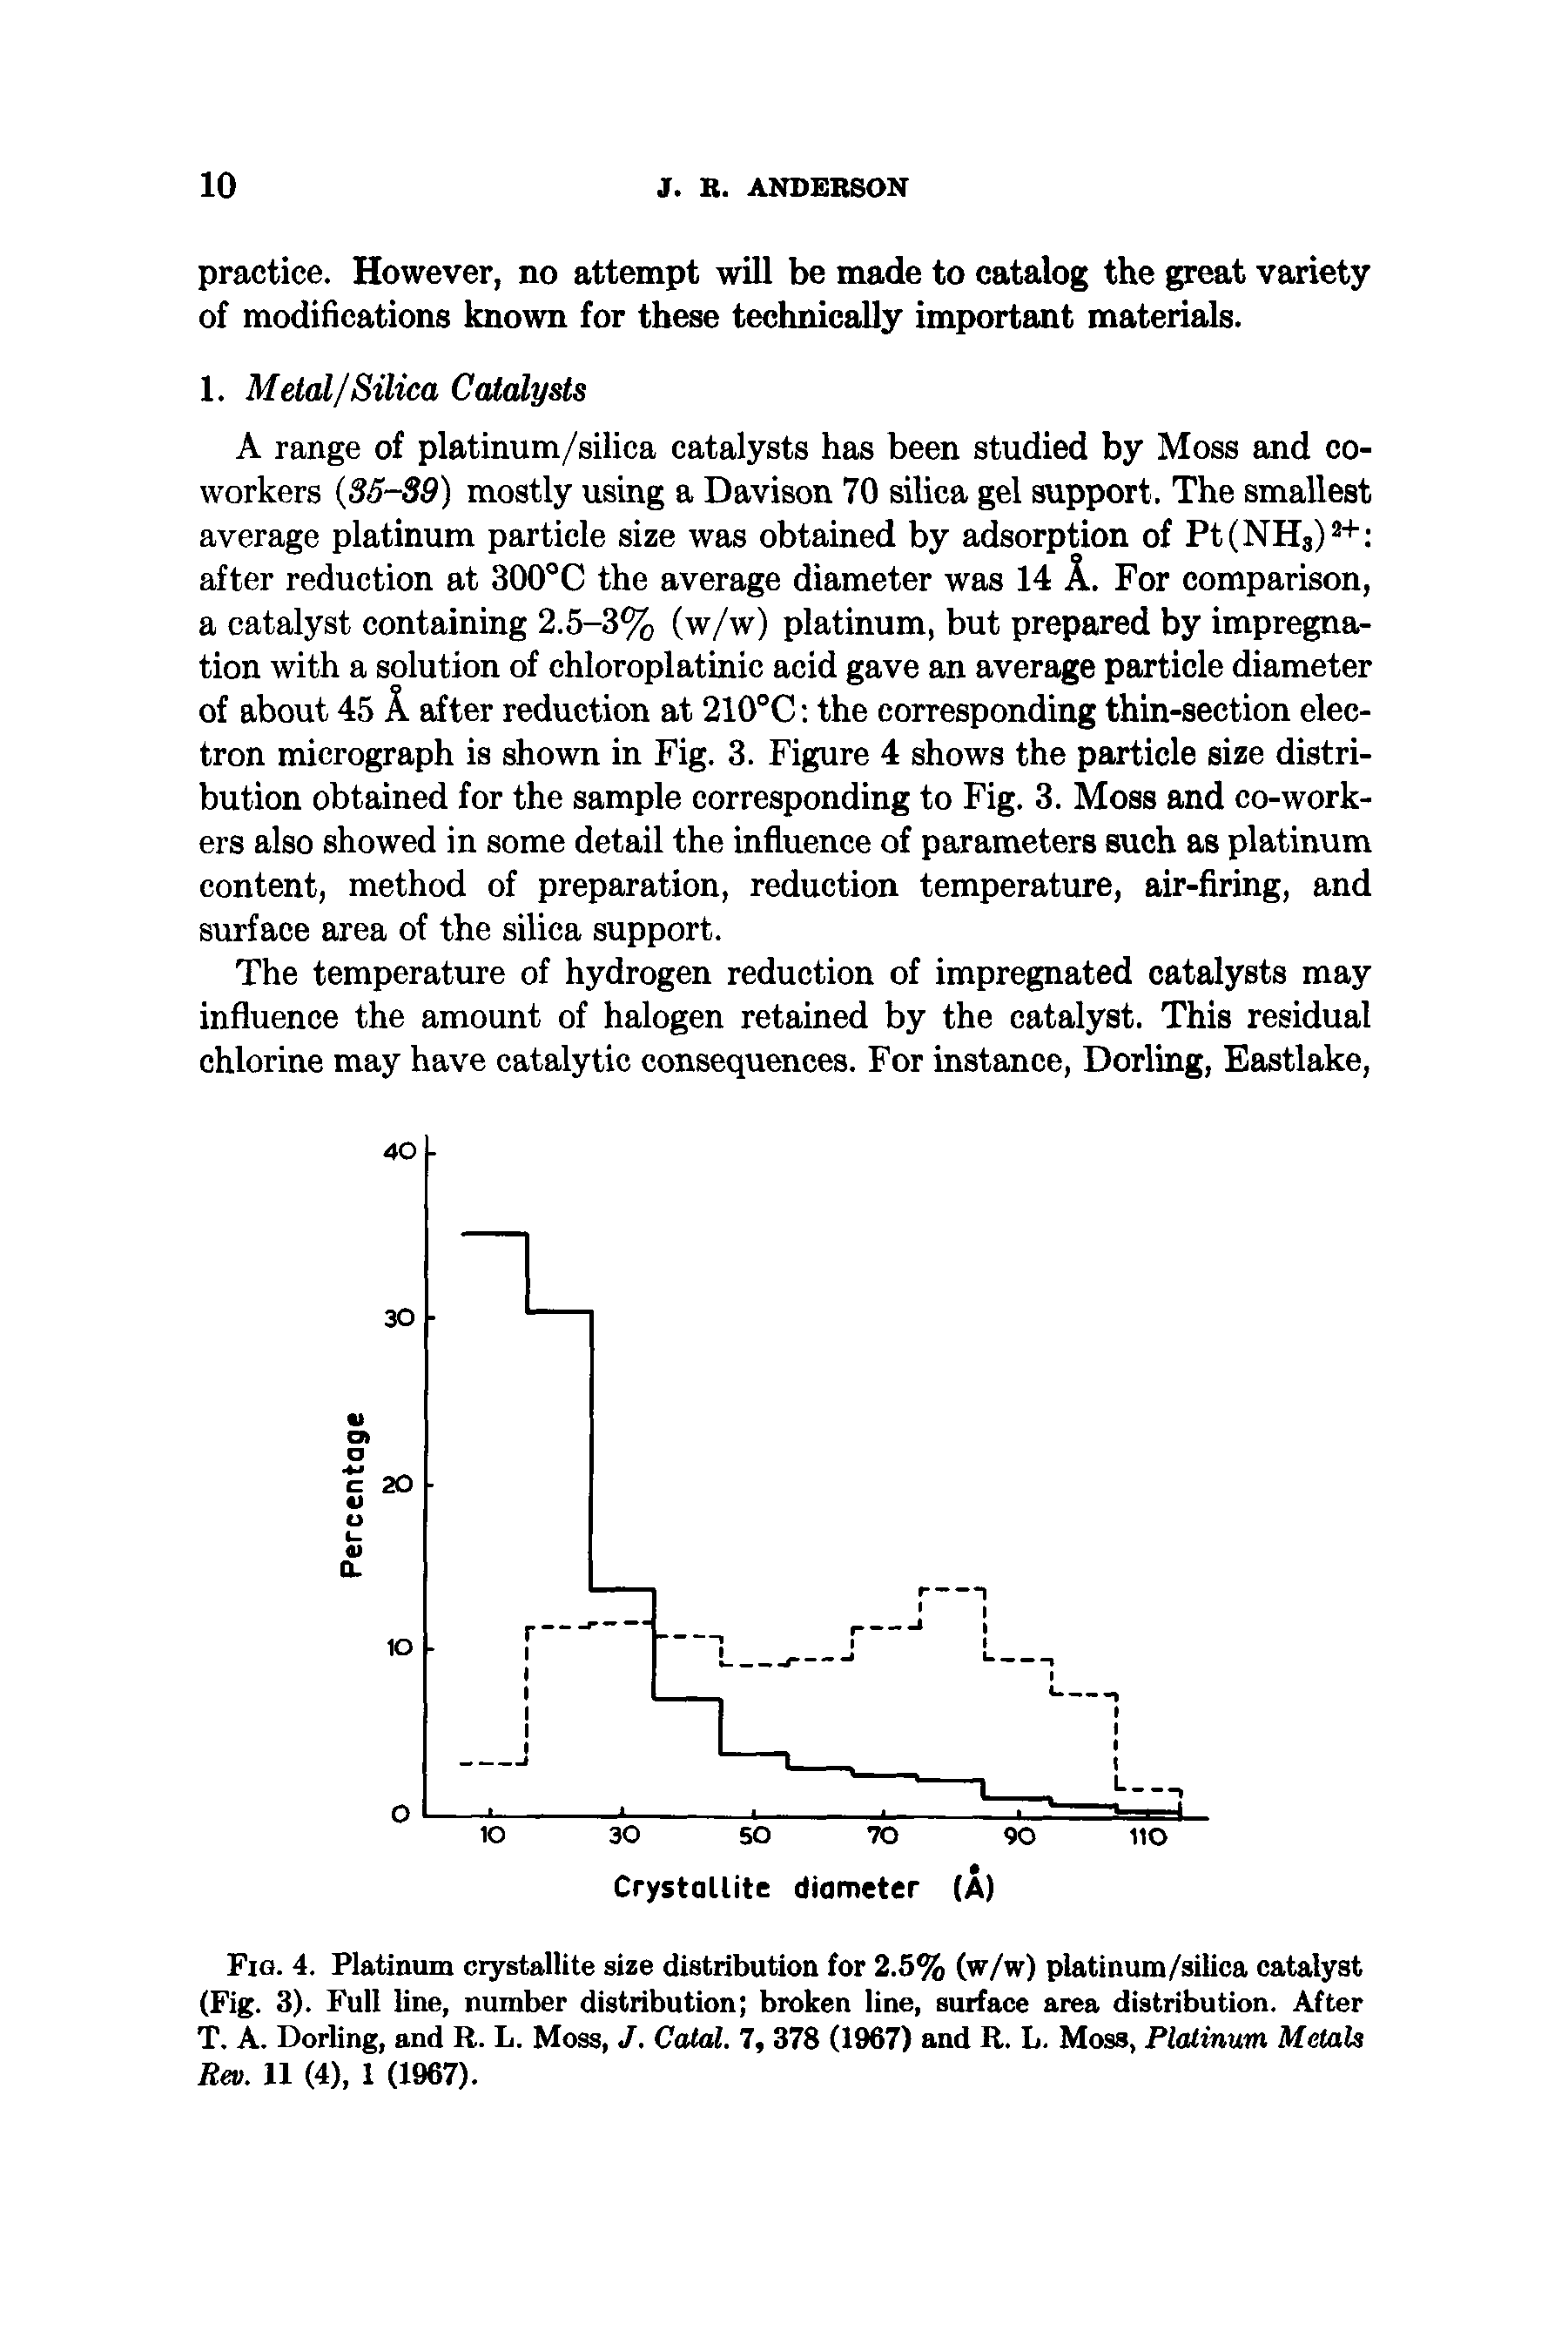 Fig. 4. Platinum crystallite size distribution for 2.5% (w/w) platinum/silica catalyst (Fig. 3). Full line, number distribution broken line, surface area distribution. After T. A. Dorling, and R. L. Moss, J. Catal. 7, 378 (1967) and R. L. Moss, Platinum Metals Rev. 11 (4), 1 (1967).